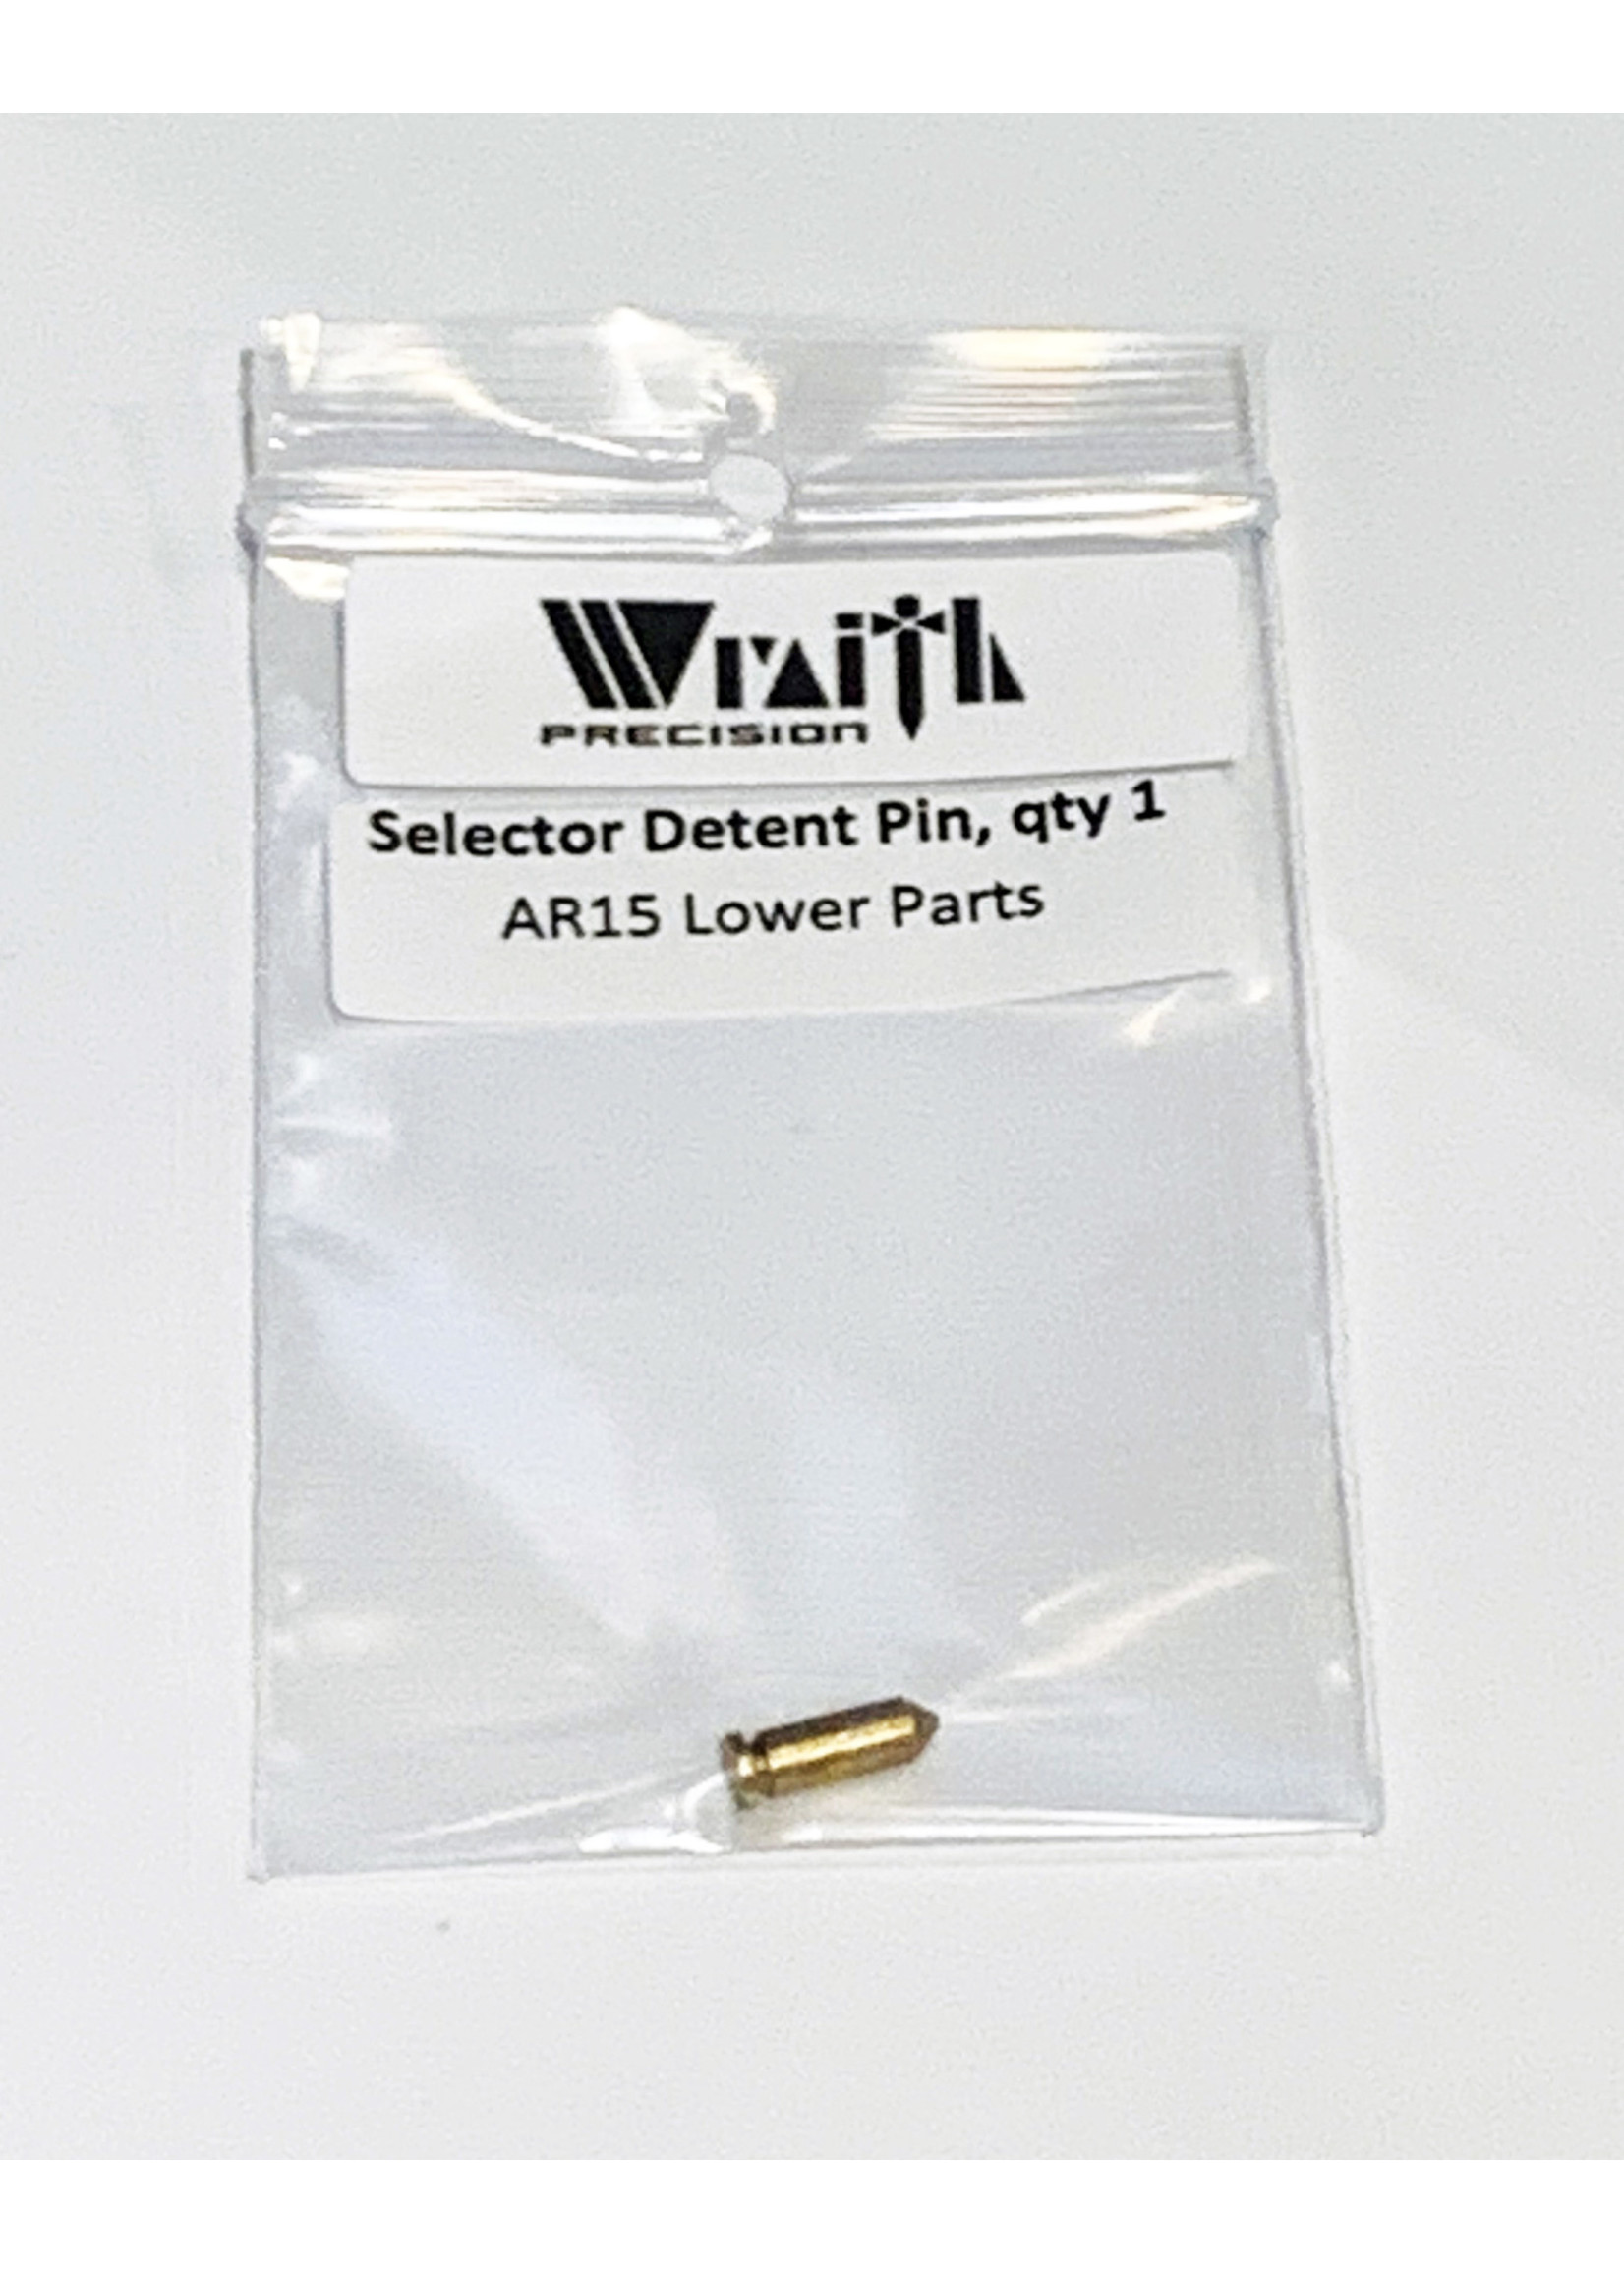 Wraith Precision Wraith Precision AR15 Lower Parts, Selector Detent Pin, Qty 1